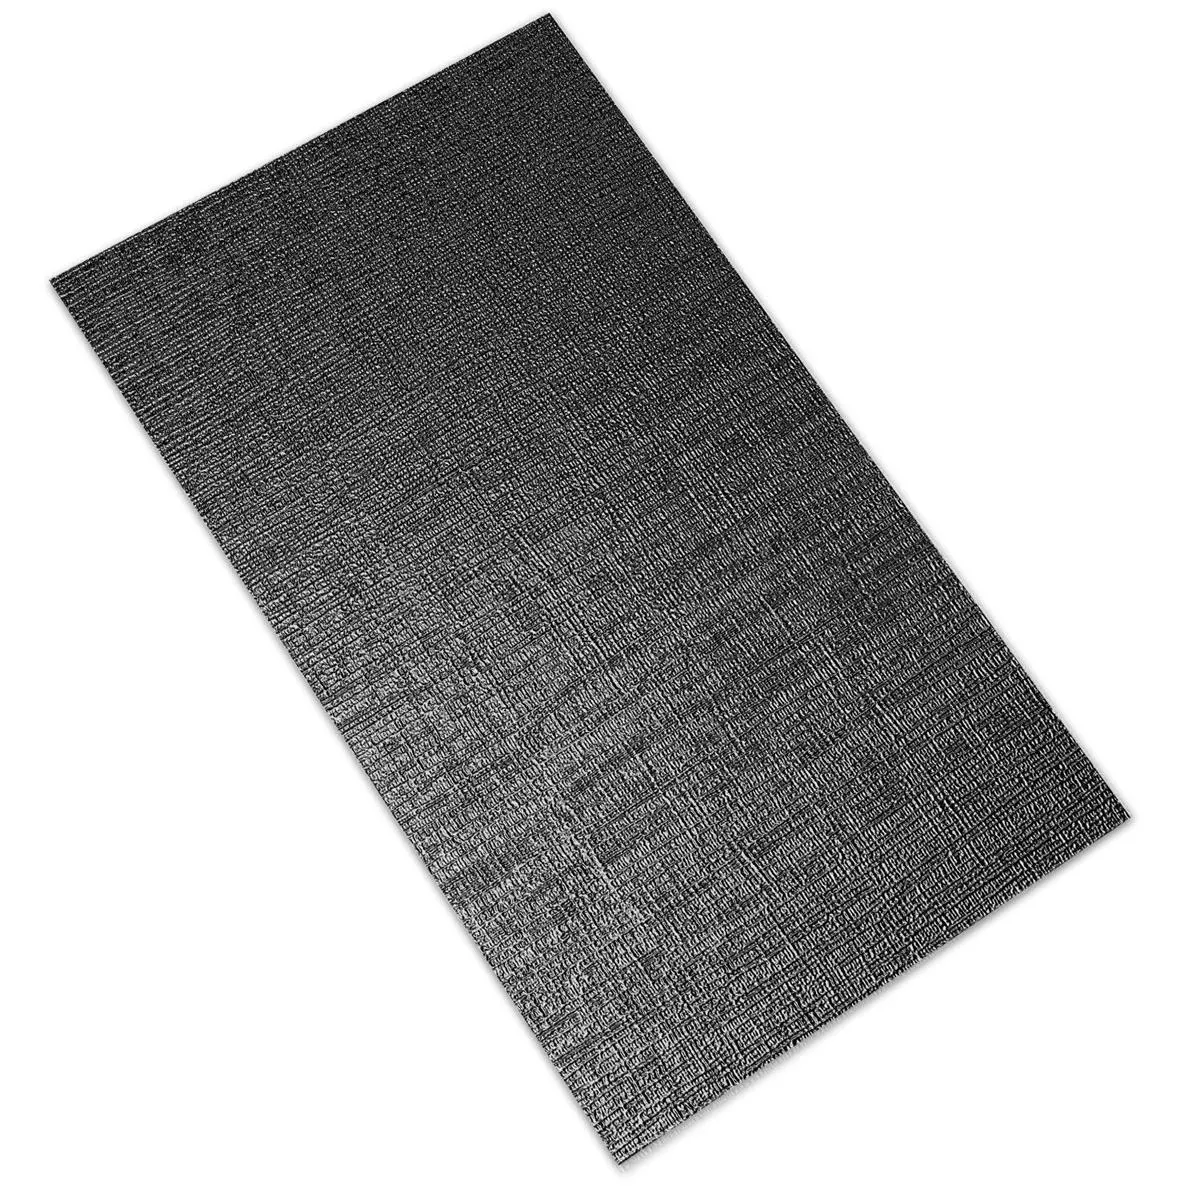 Wall Tiles Vulcano Metal Decor Black Mat 60x120cm